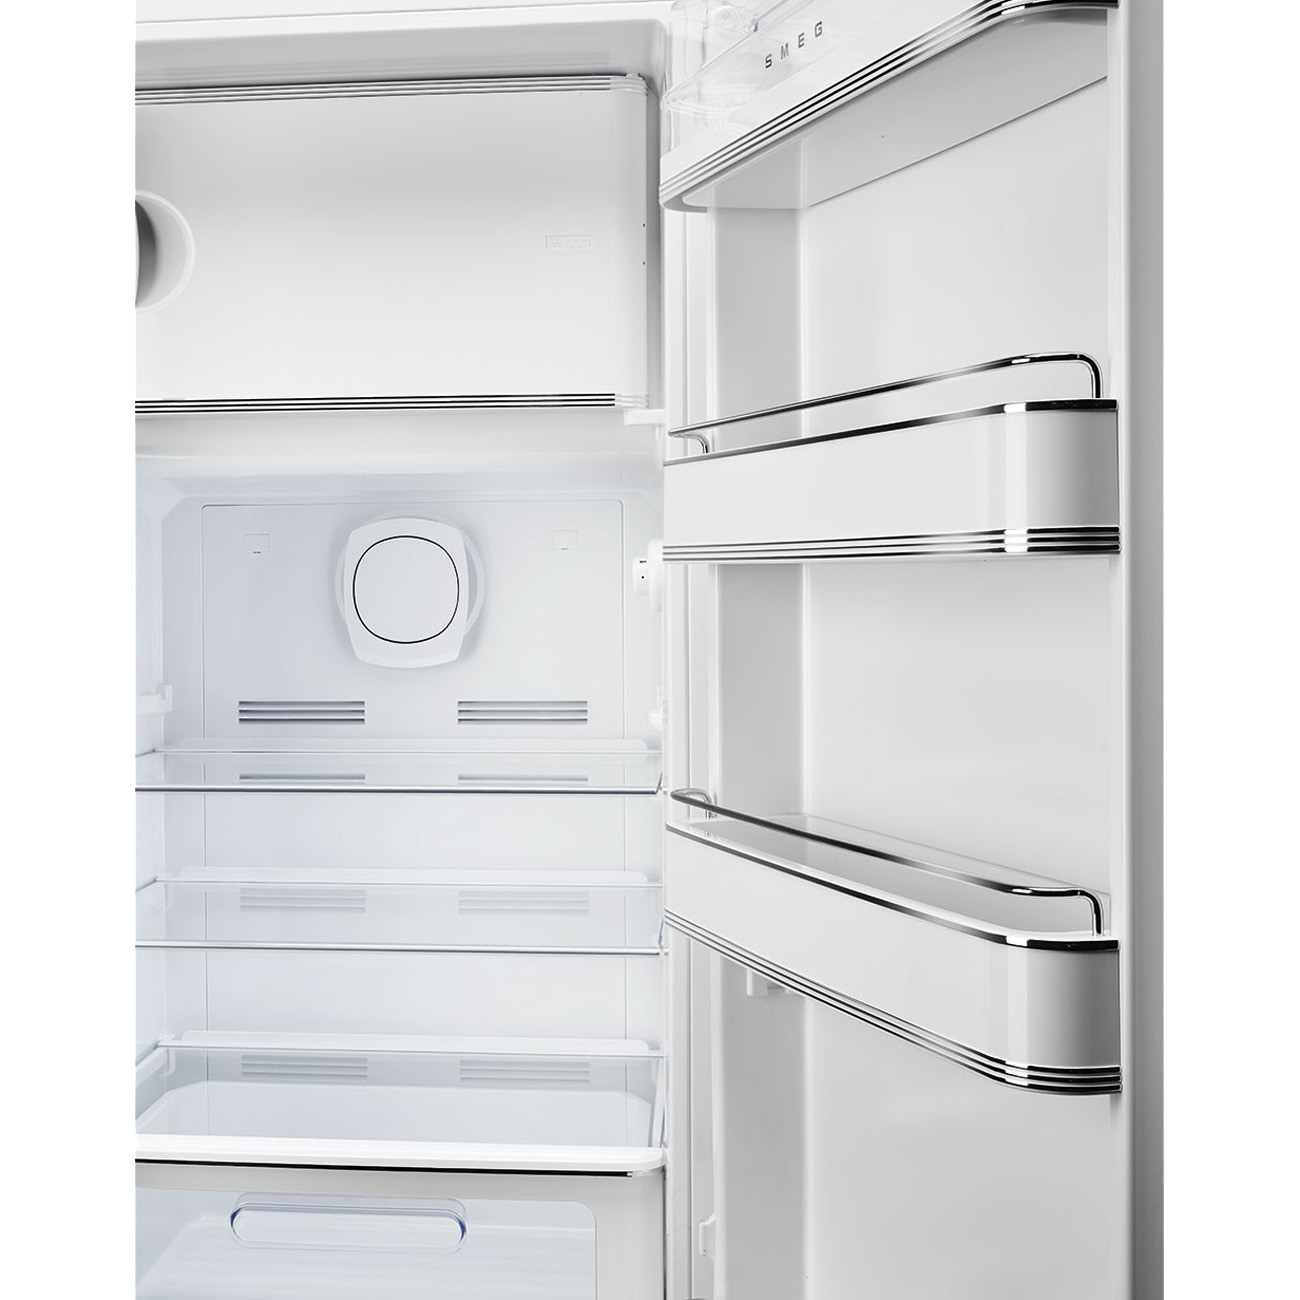 Perfectly Pale refrigerator - Smeg_5